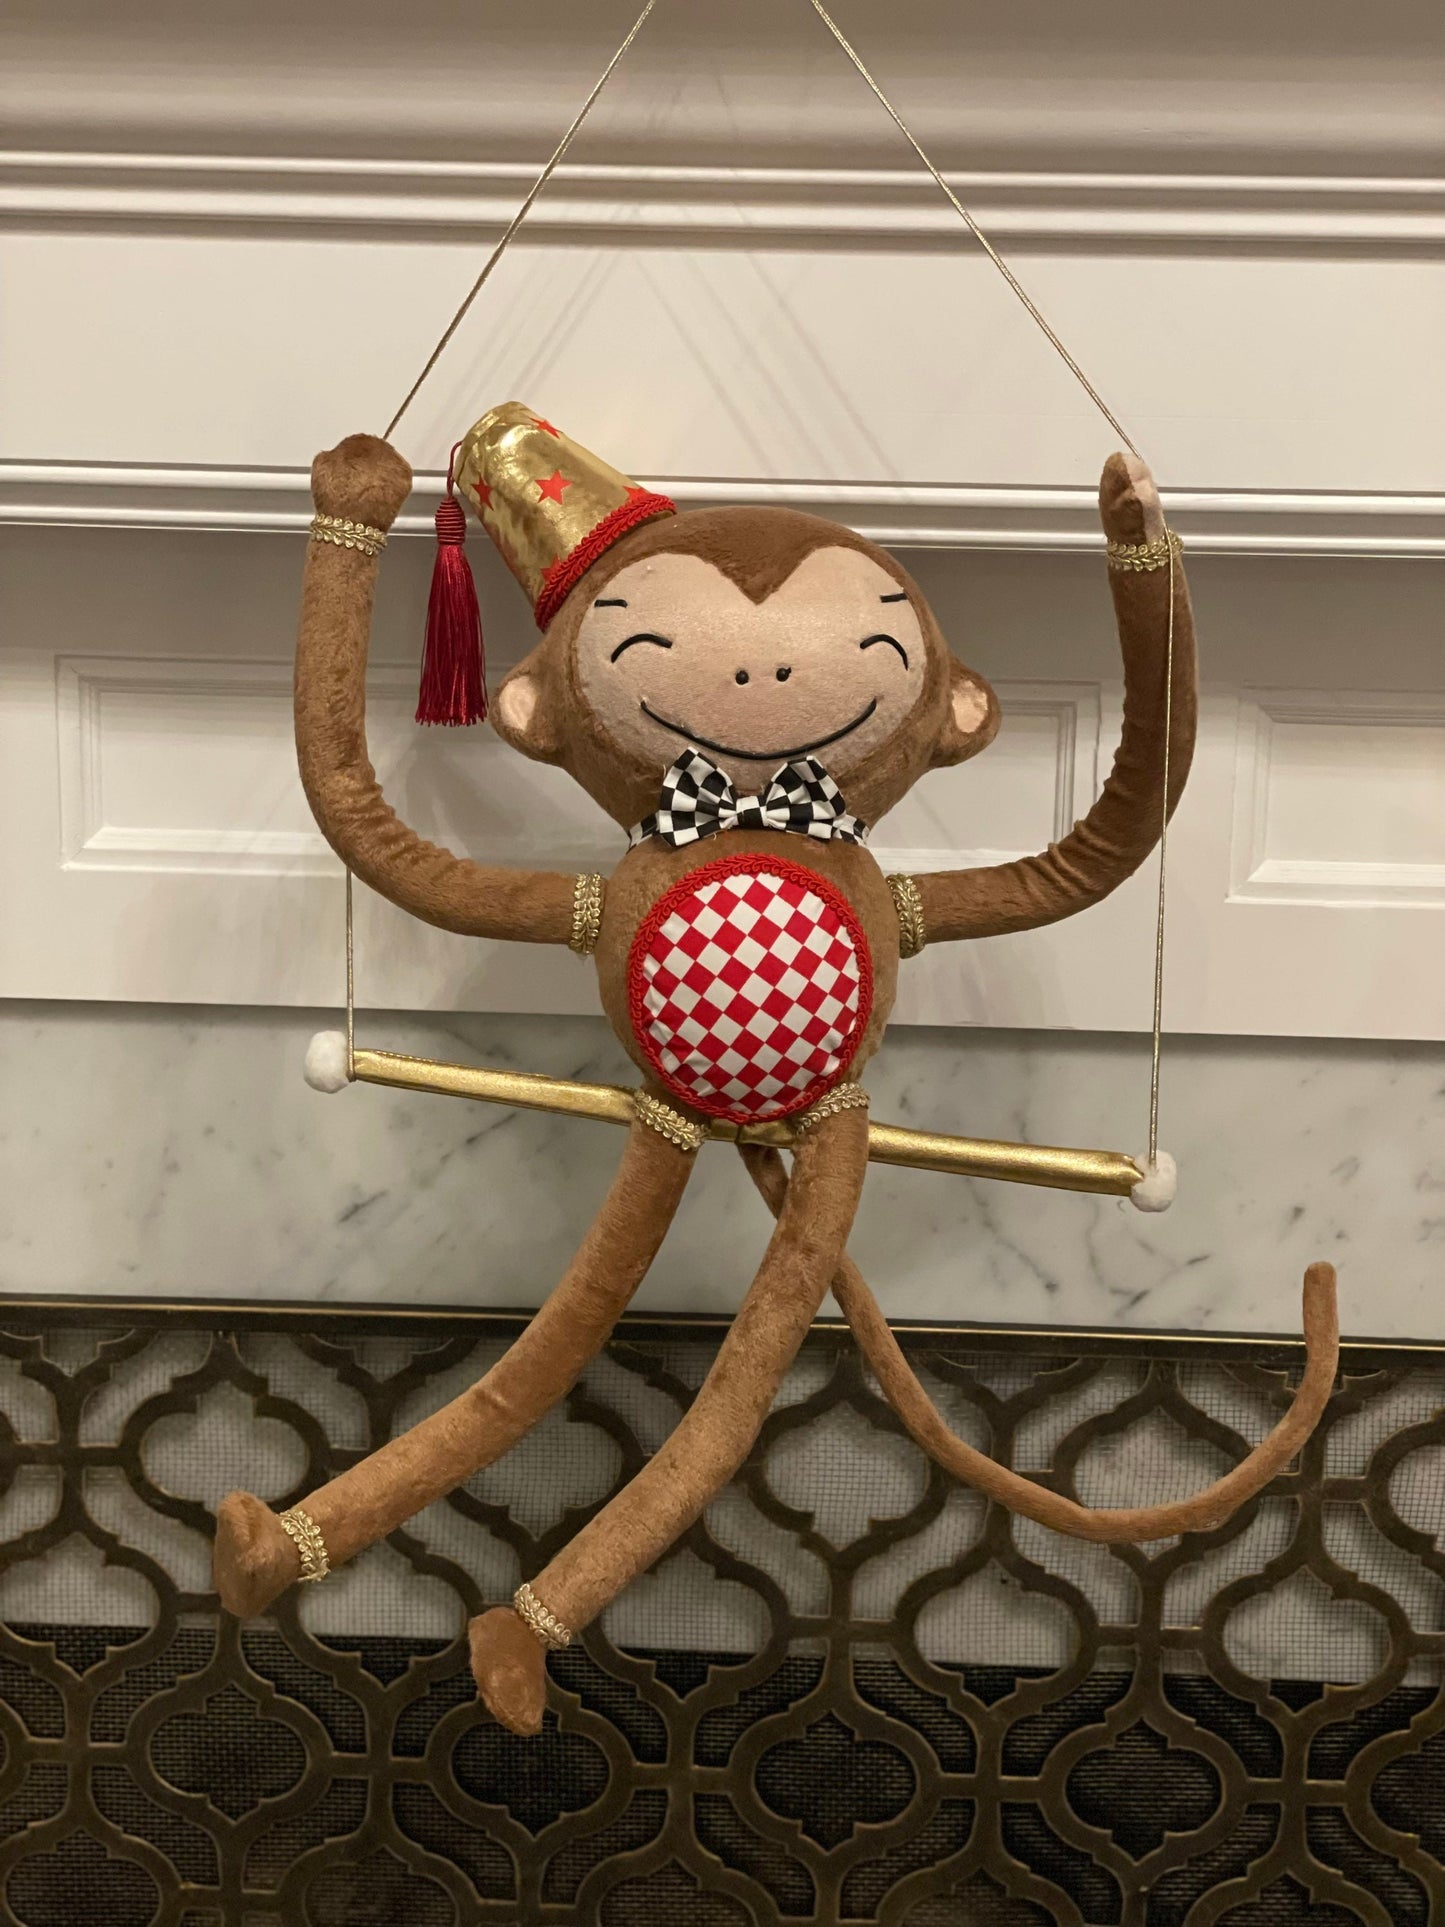 22"x19" Monkey ornament. Circus. Christmas. Party animal.